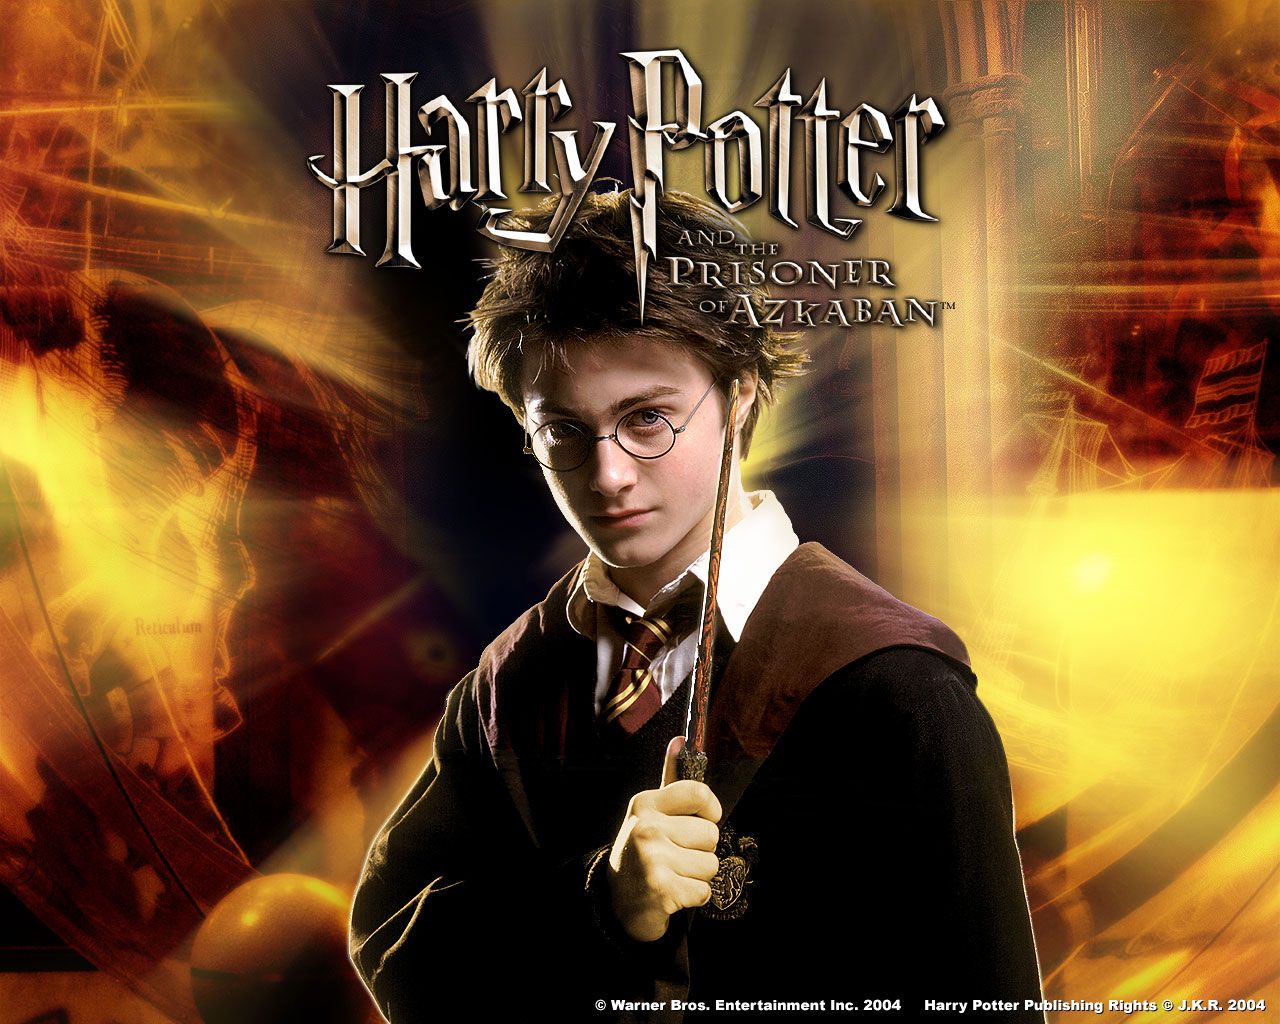 Wallpapers Harry Potter Harry Potter and the Prisoner of Azkaban ...